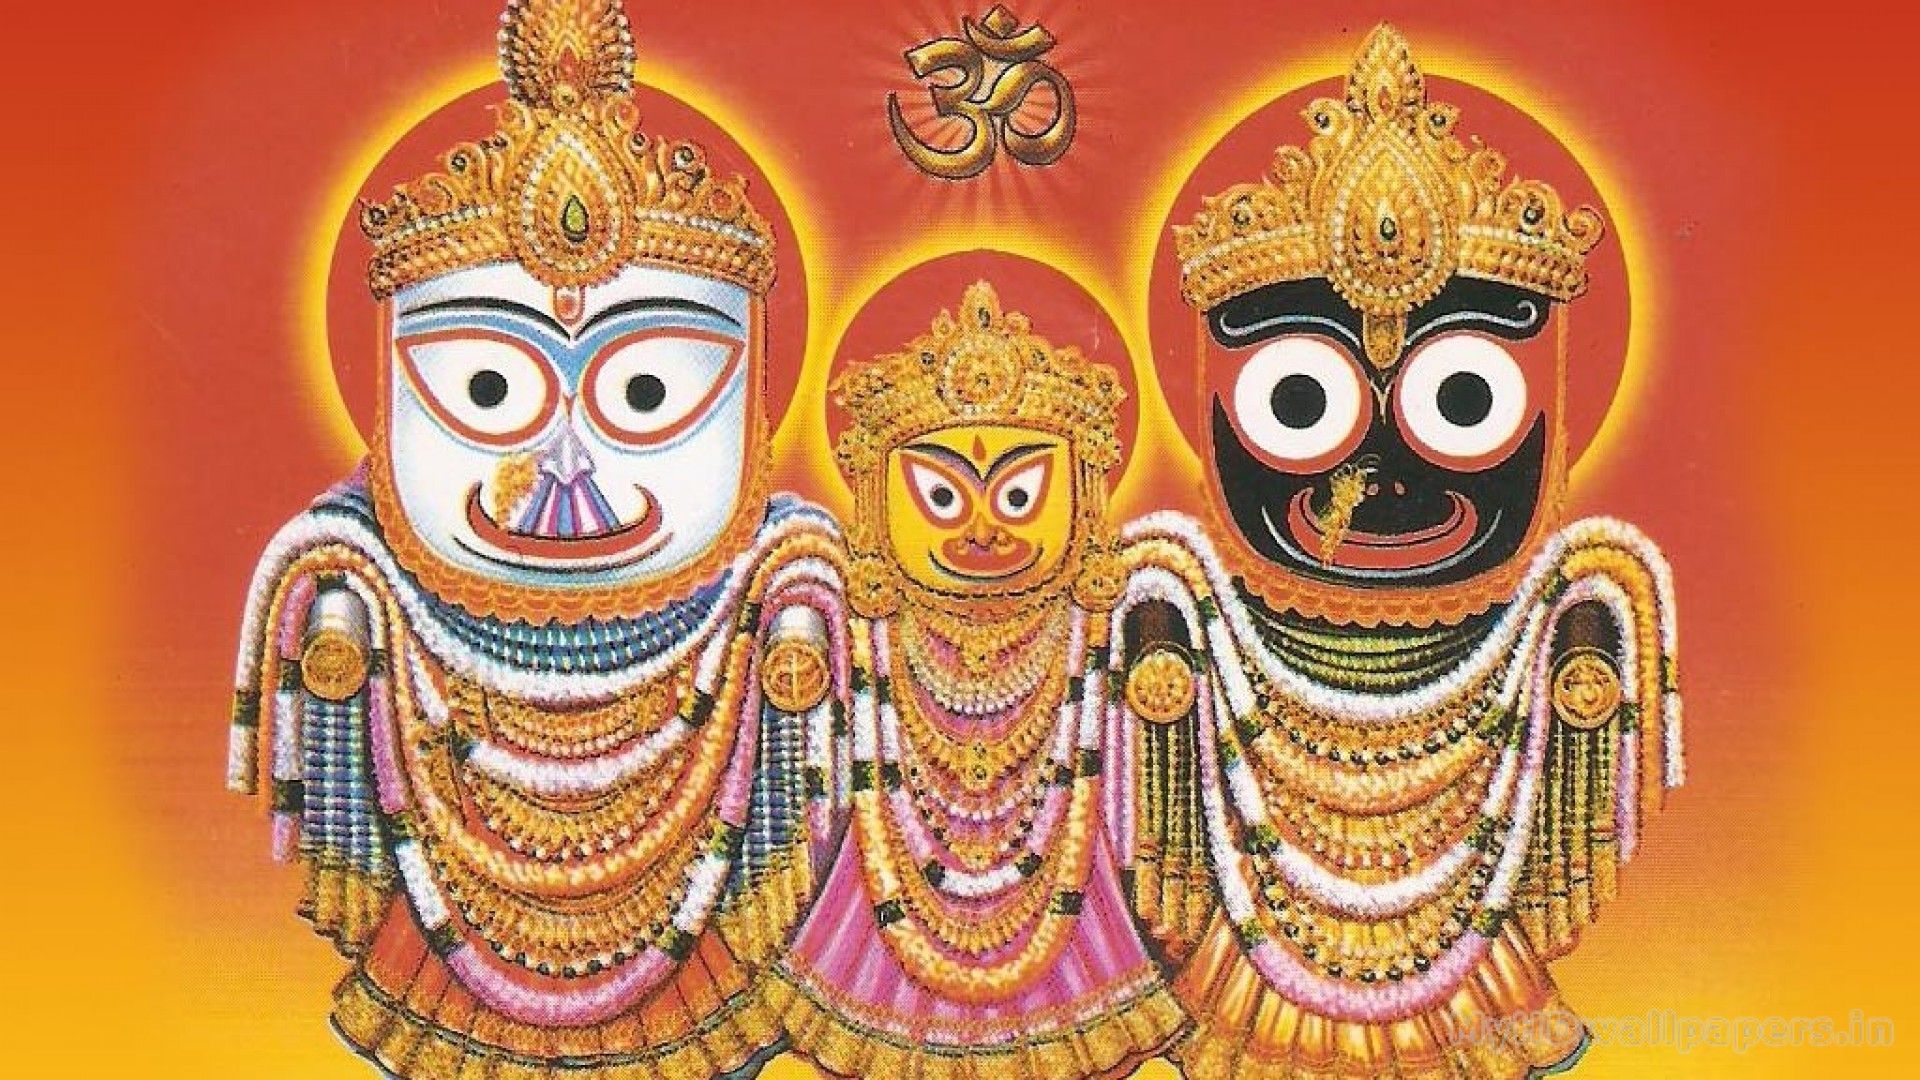 hindu god wallpaper hd 1920x1080,art,temple,fictional character,place of worship